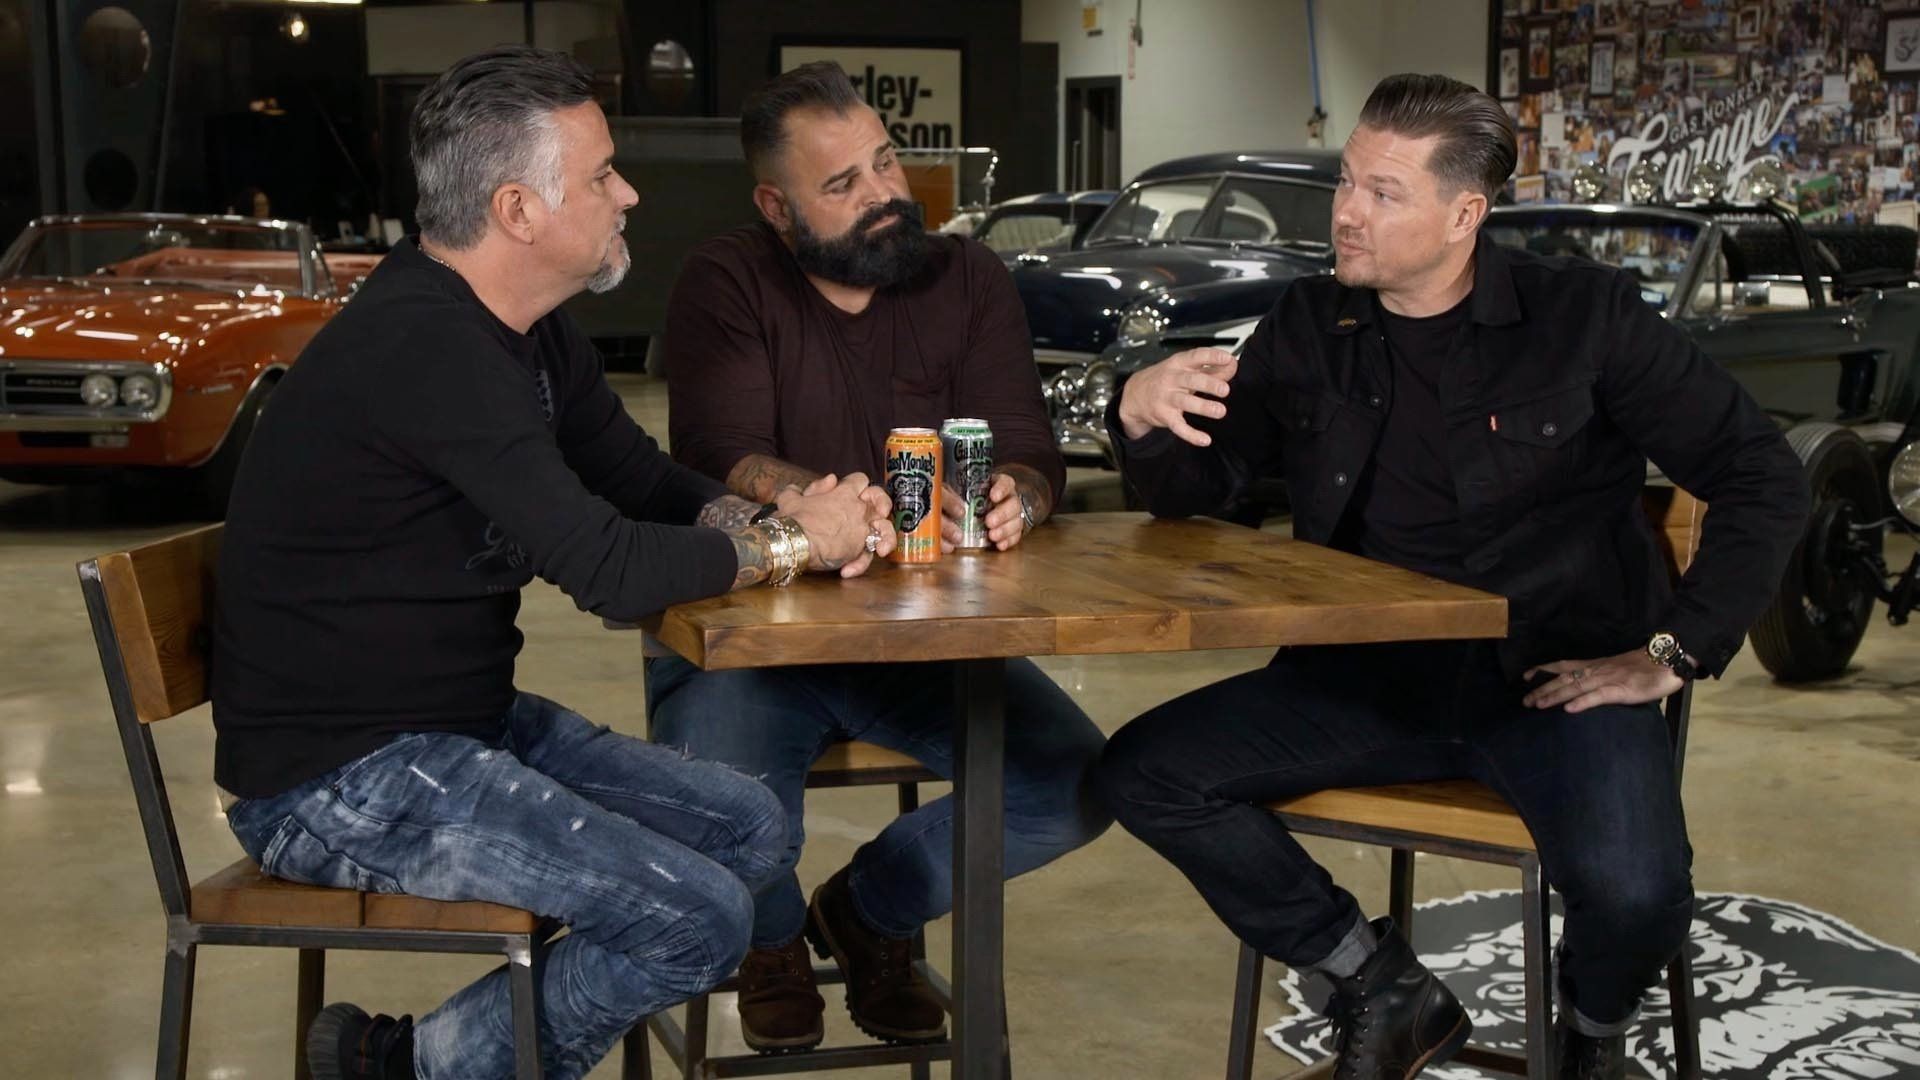 Garage Rehab Show - Full Episodes on Demand - MotorTrend